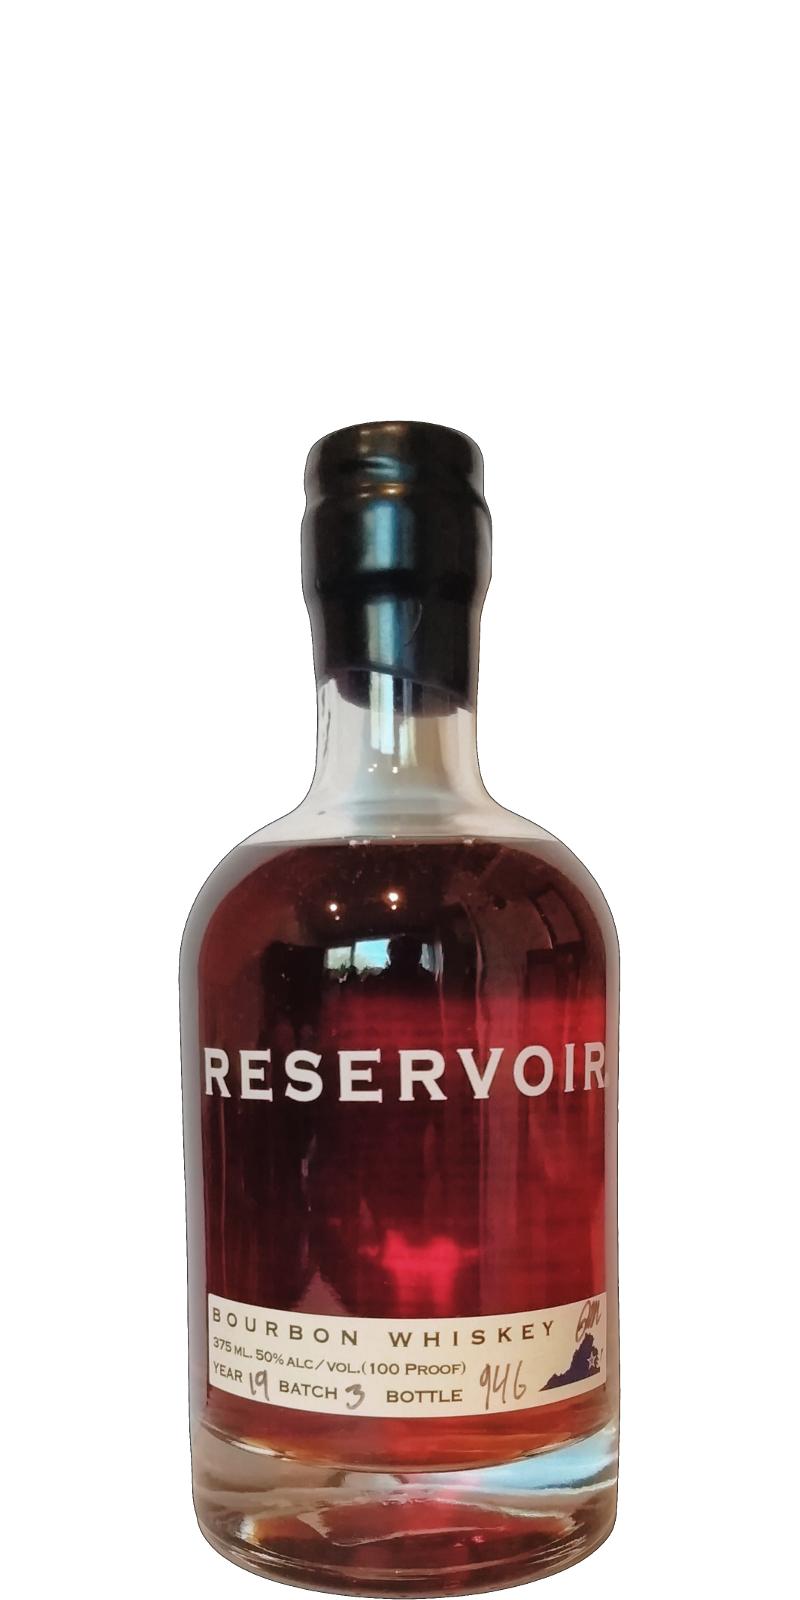 Reservoir Bourbon Whisky American Oak Alligator Char Barrel # 4 Char Batch 3 50% 375ml